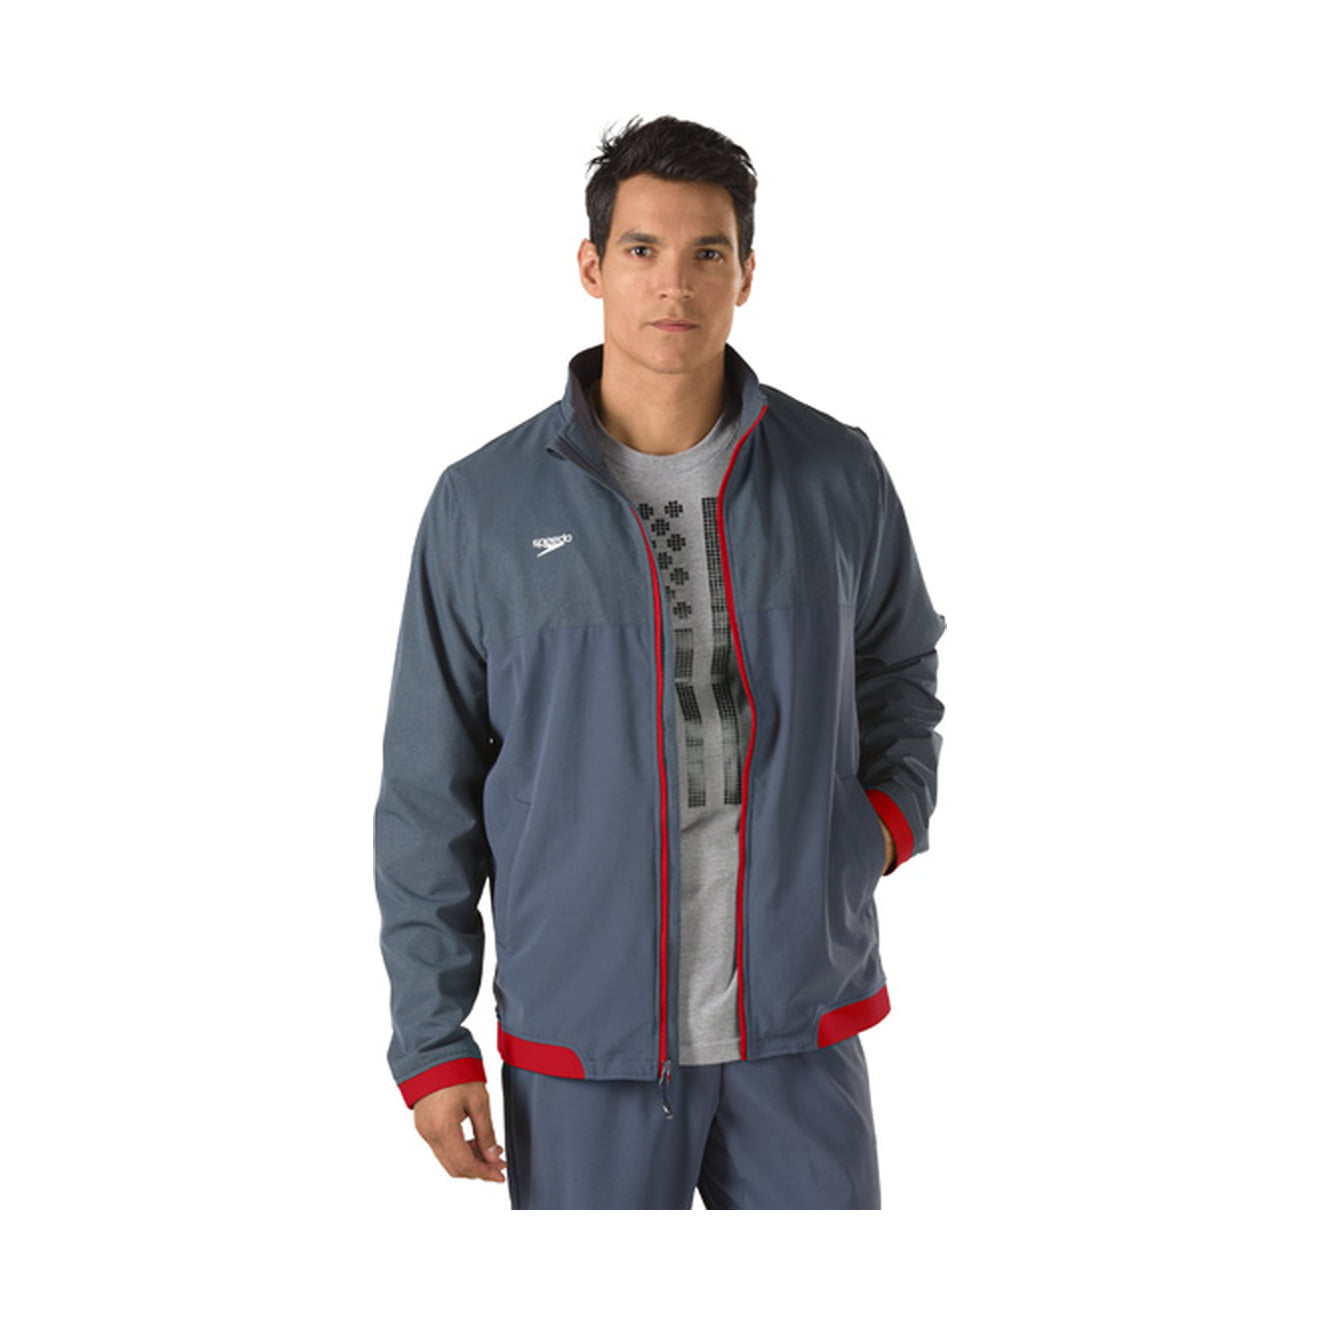 Speedo Warm-Up Jacket Male TECH - Walmart.com